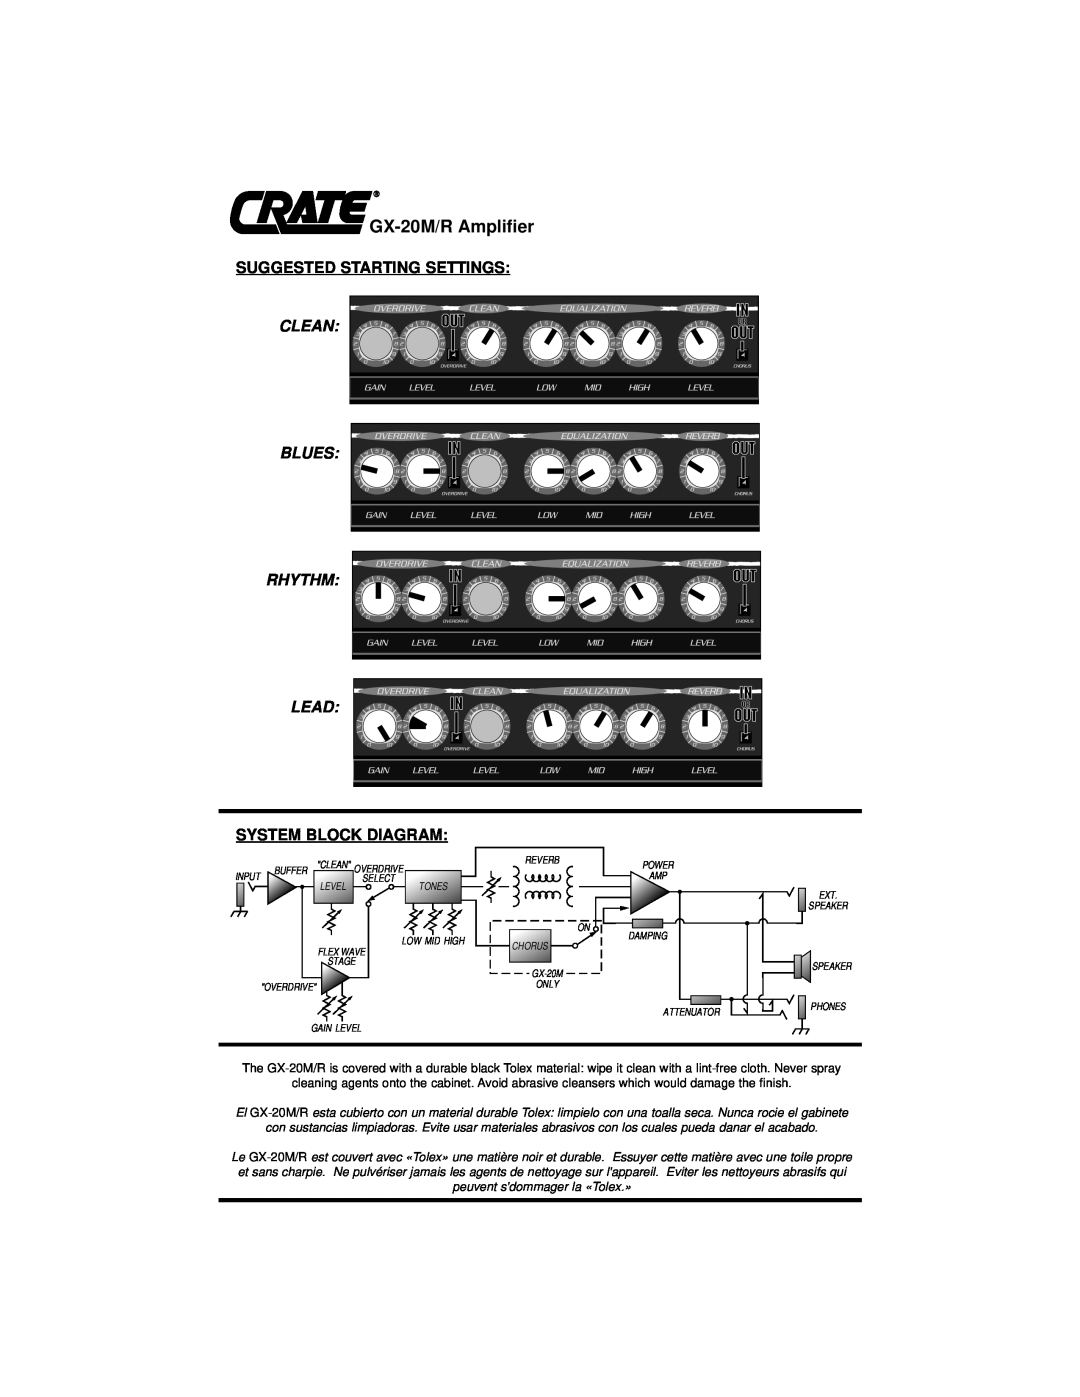 Crate Amplifiers GX-20M /R Suggested Starting Settings, Clean, Blues Rhythm Lead, System Block Diagram, GX-20M/RAmplifier 